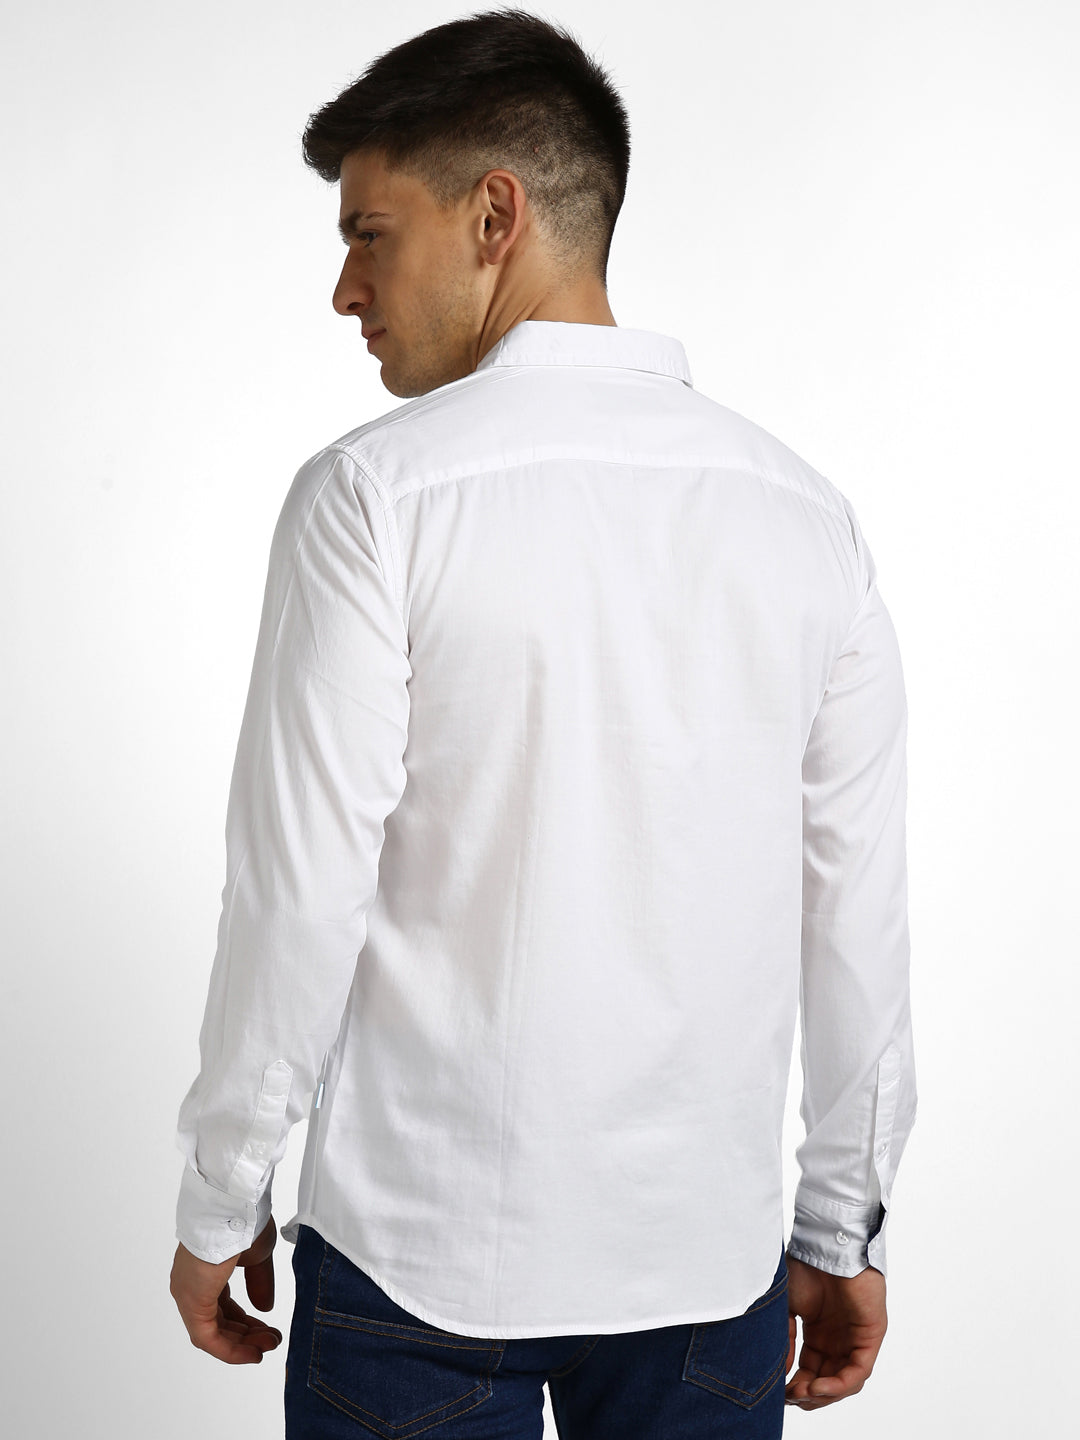 Urbano Fashion Men's White Cotton Full Sleeve Slim Fit Casual Solid Shirt